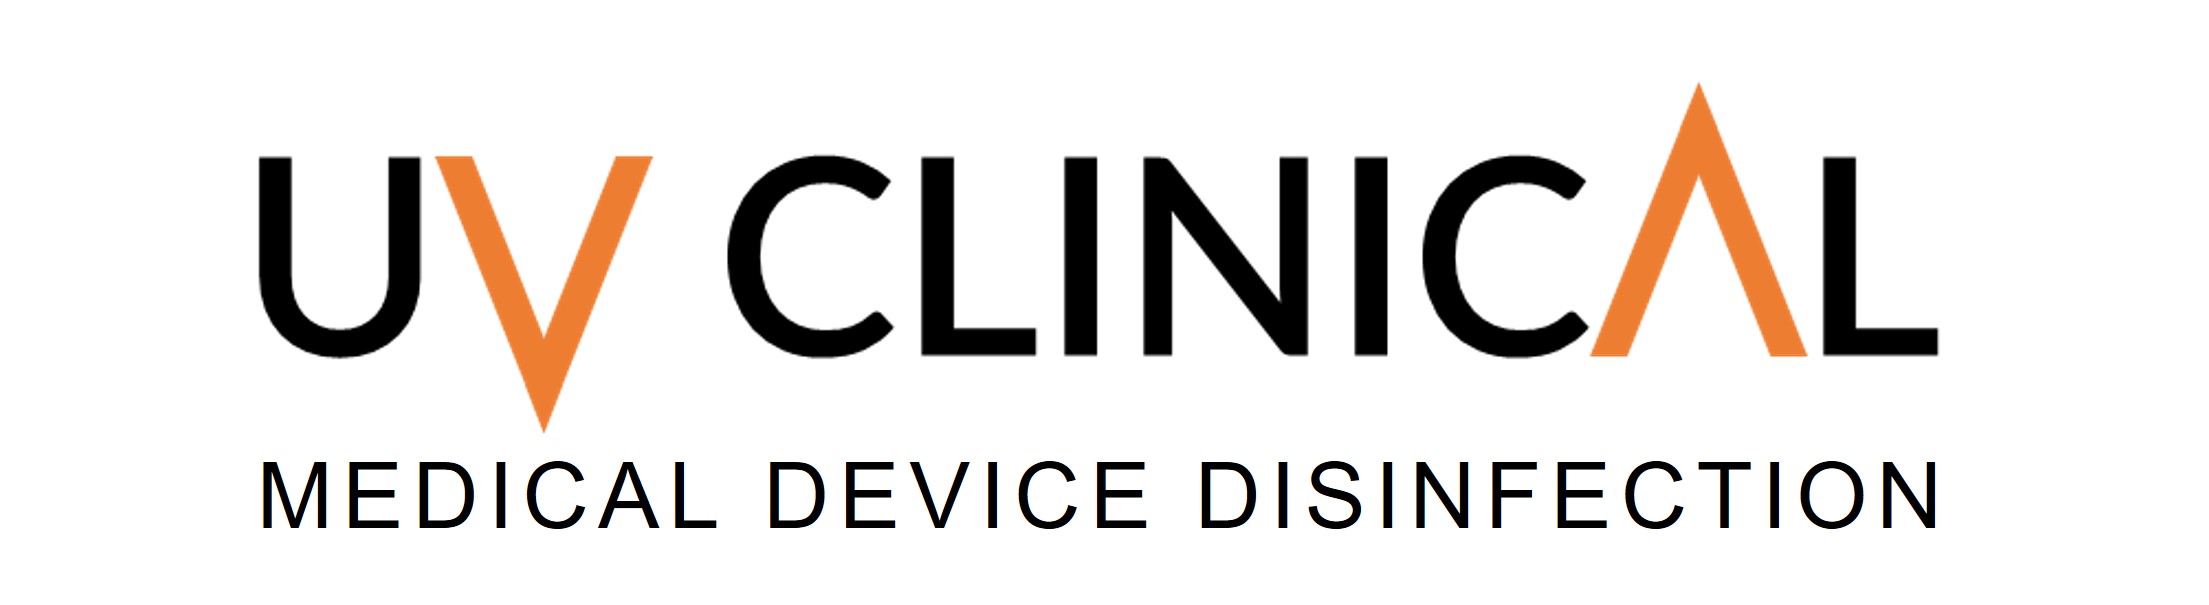 UV Clinical Logotype plus tag line